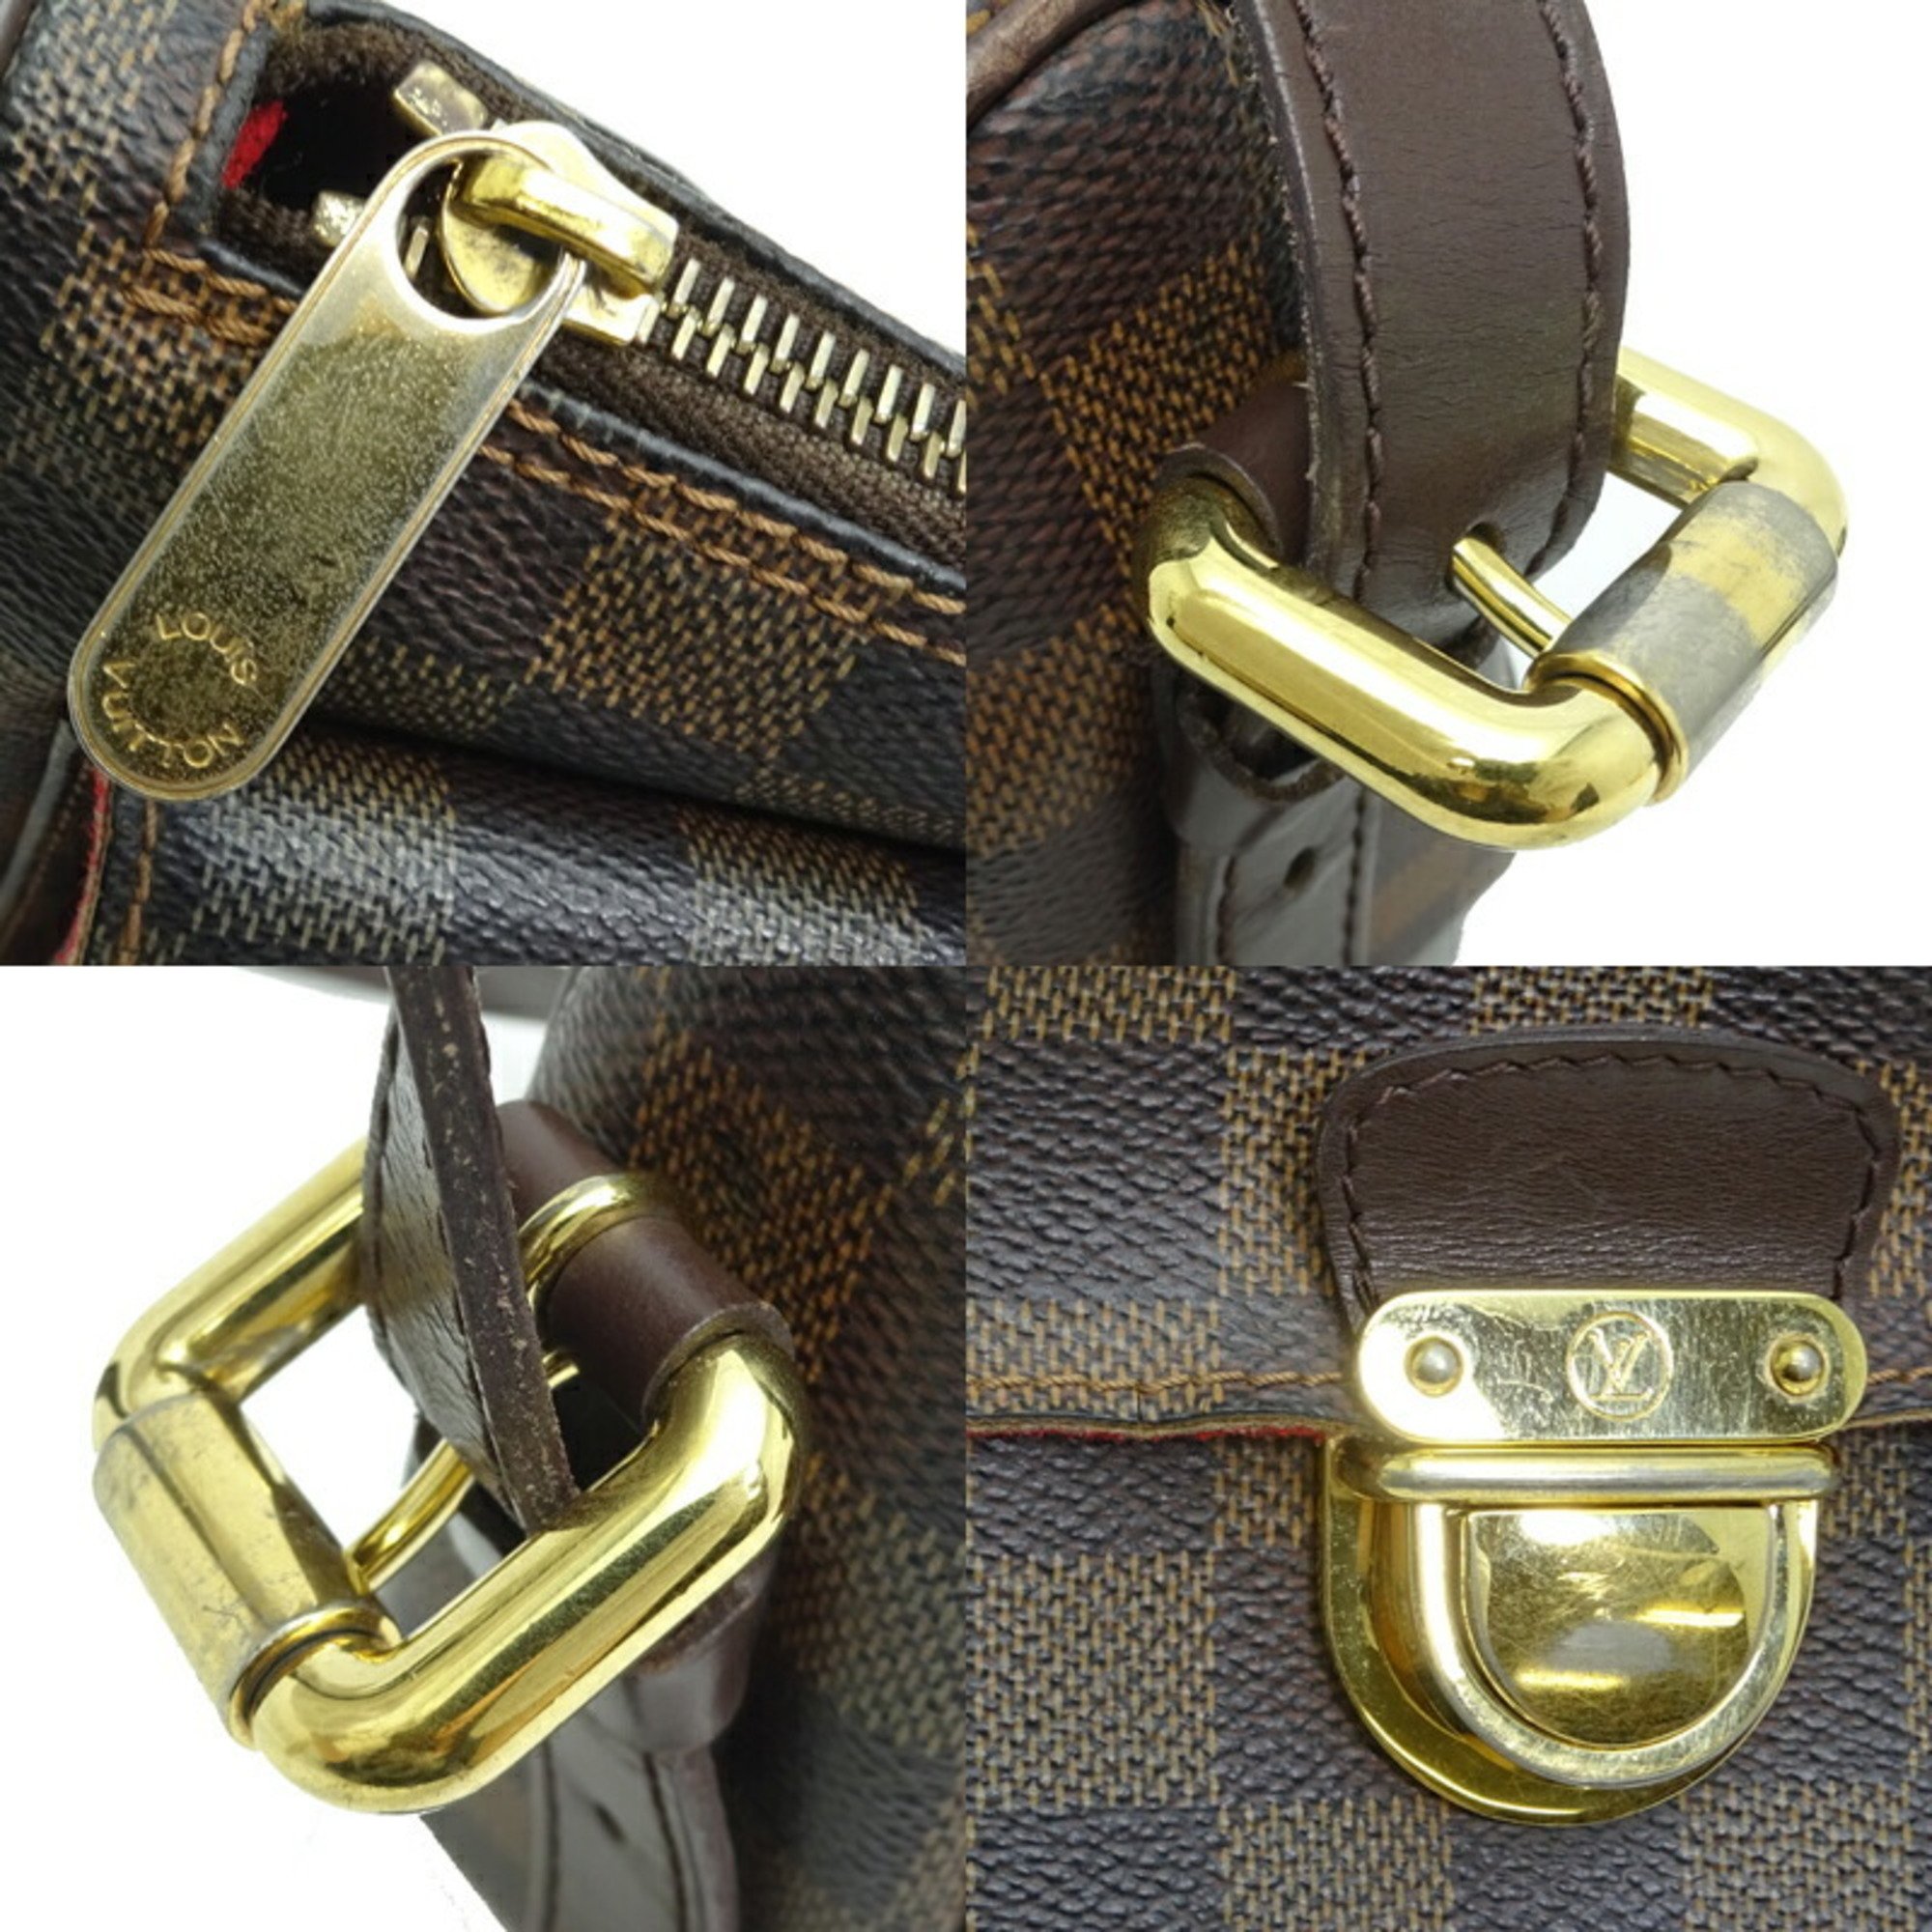 Louis Vuitton Ravello GM Women's Shoulder Bag N60006 Damier Ebene (Brown)